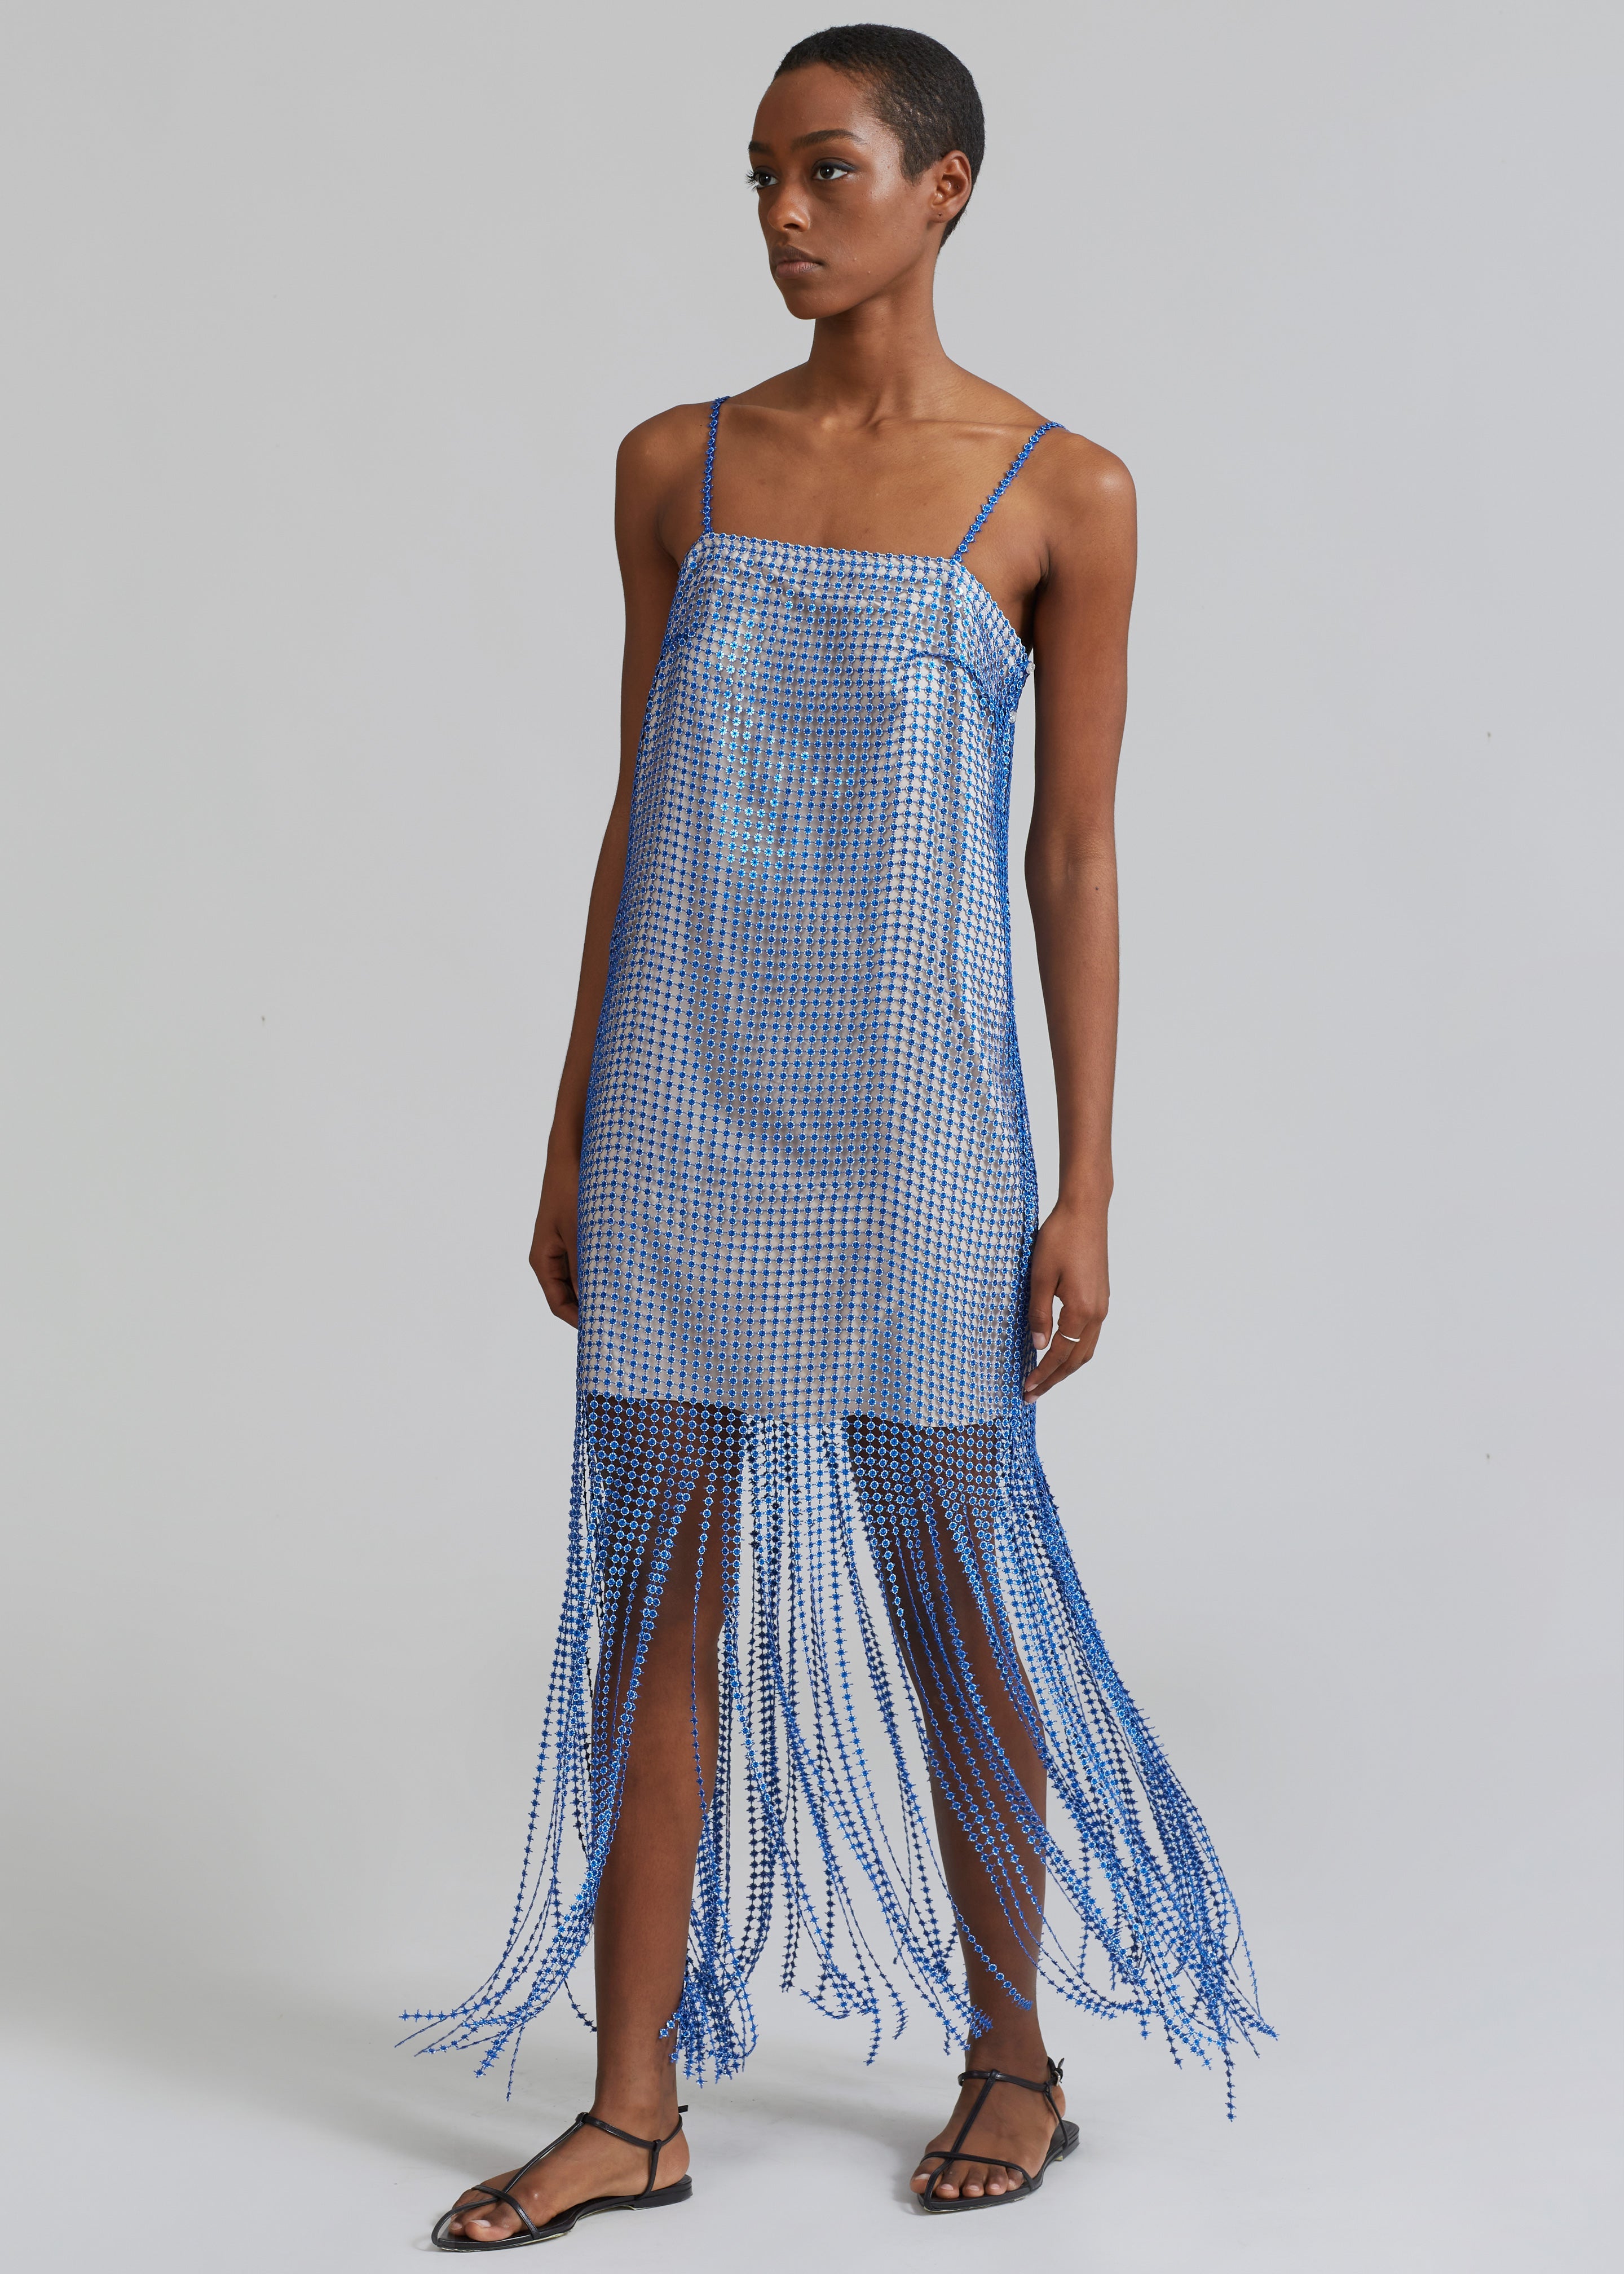 REMAIN Sequin Lace Fringe Dress - Surf The Web Comb. - 8